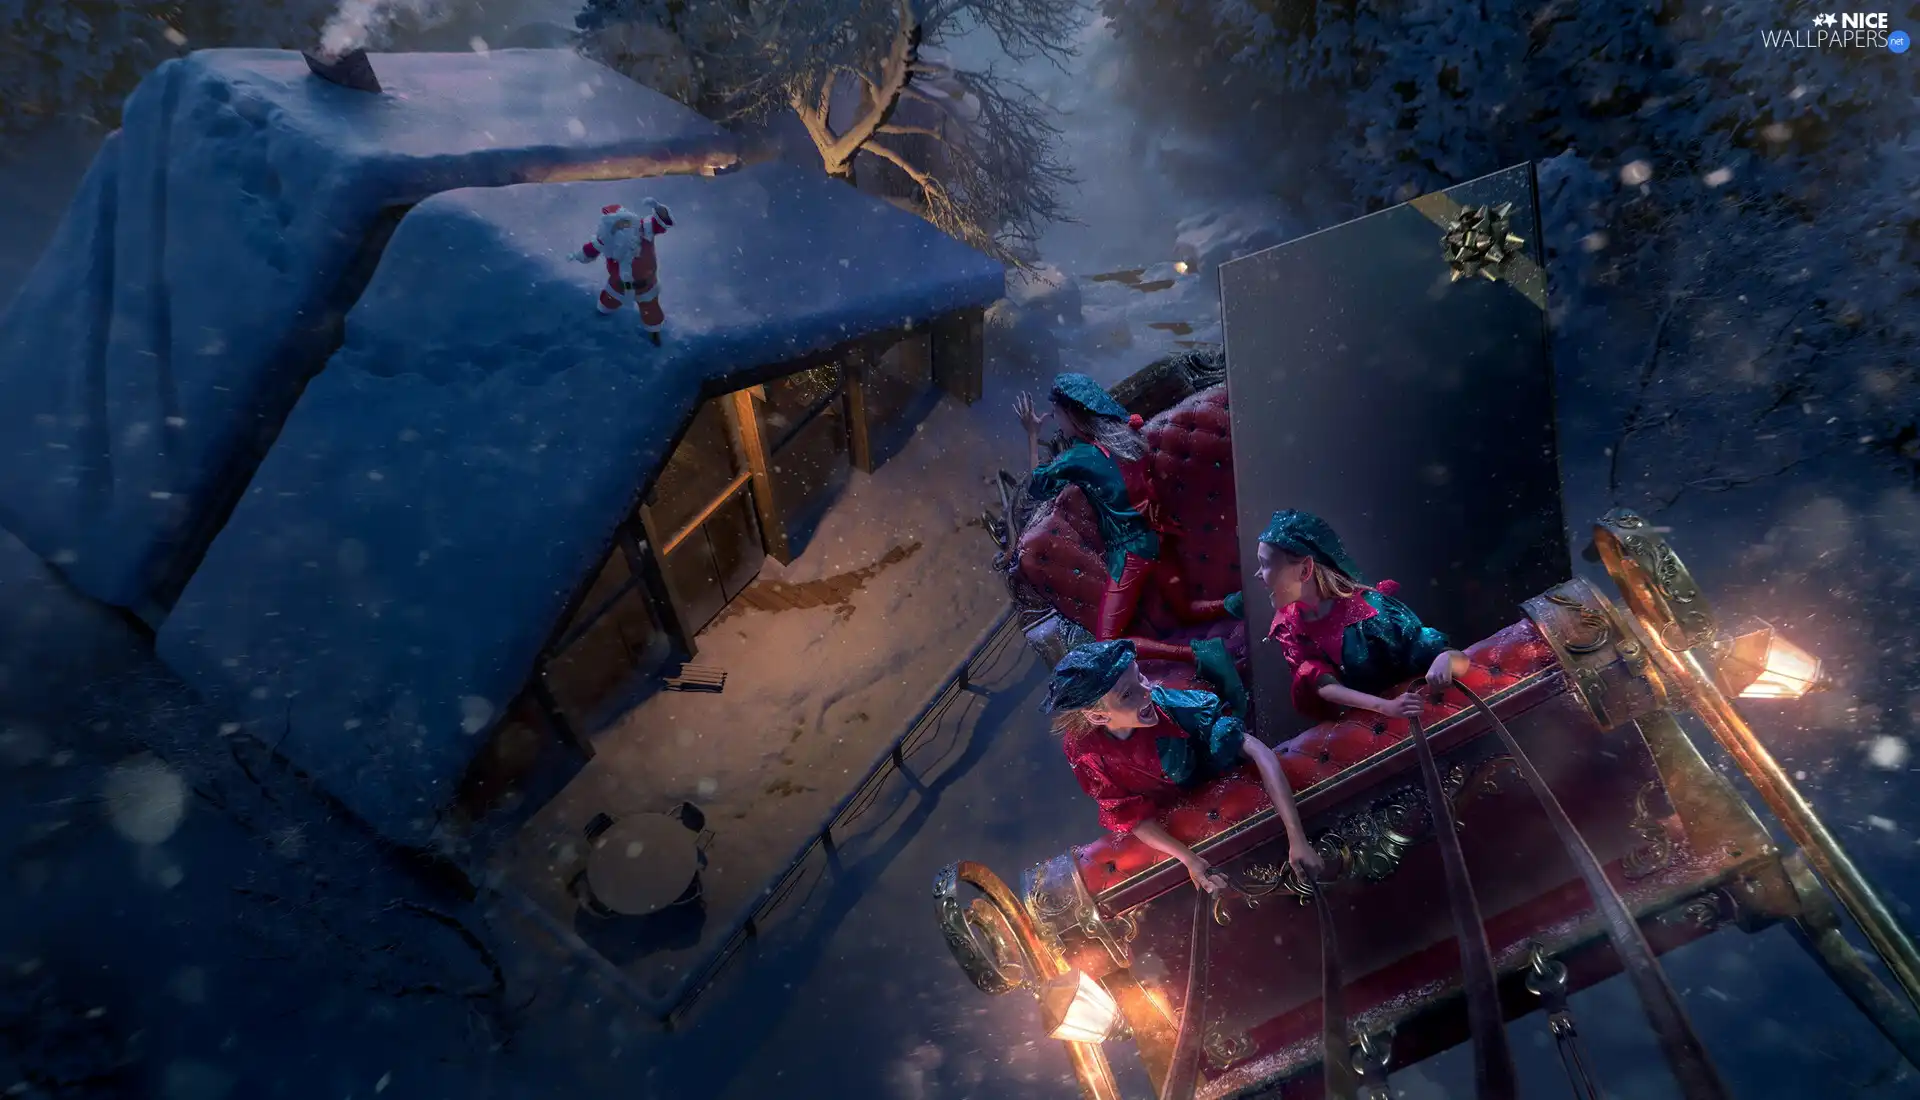 snow, house, Present, the roof, Kids, Night, Santa, sleigh